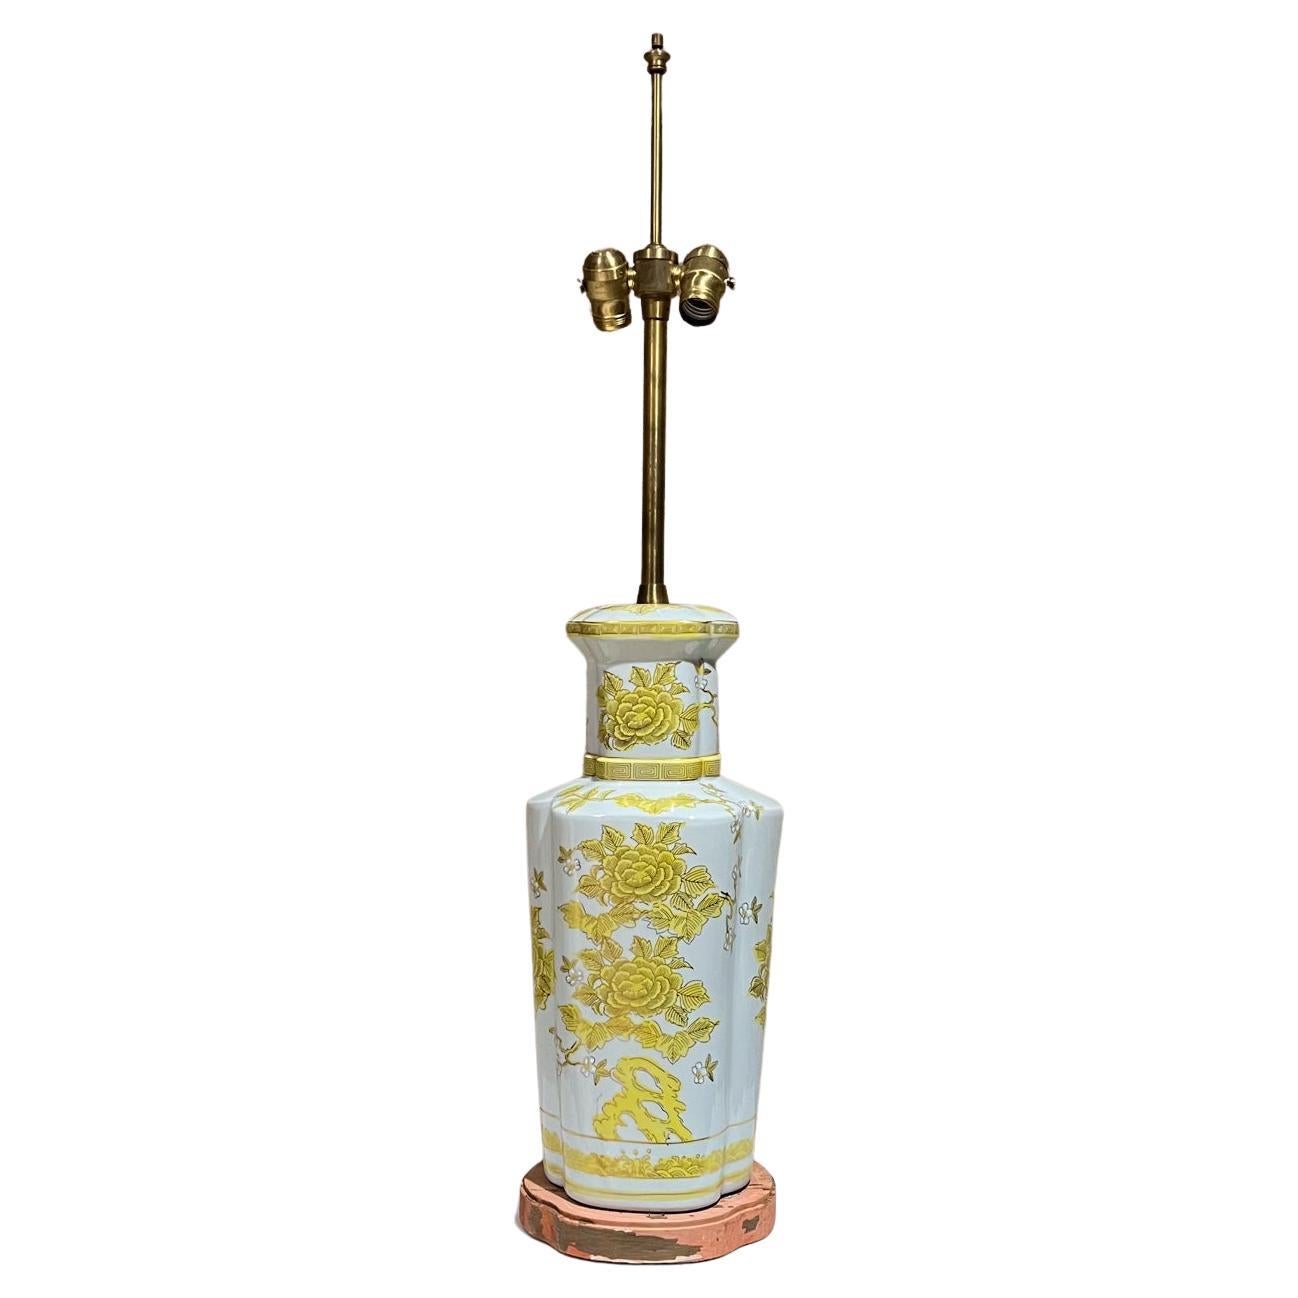 1960s Vintage Marbro Oriental Table Lamp White & Yellow Floral Porcelain